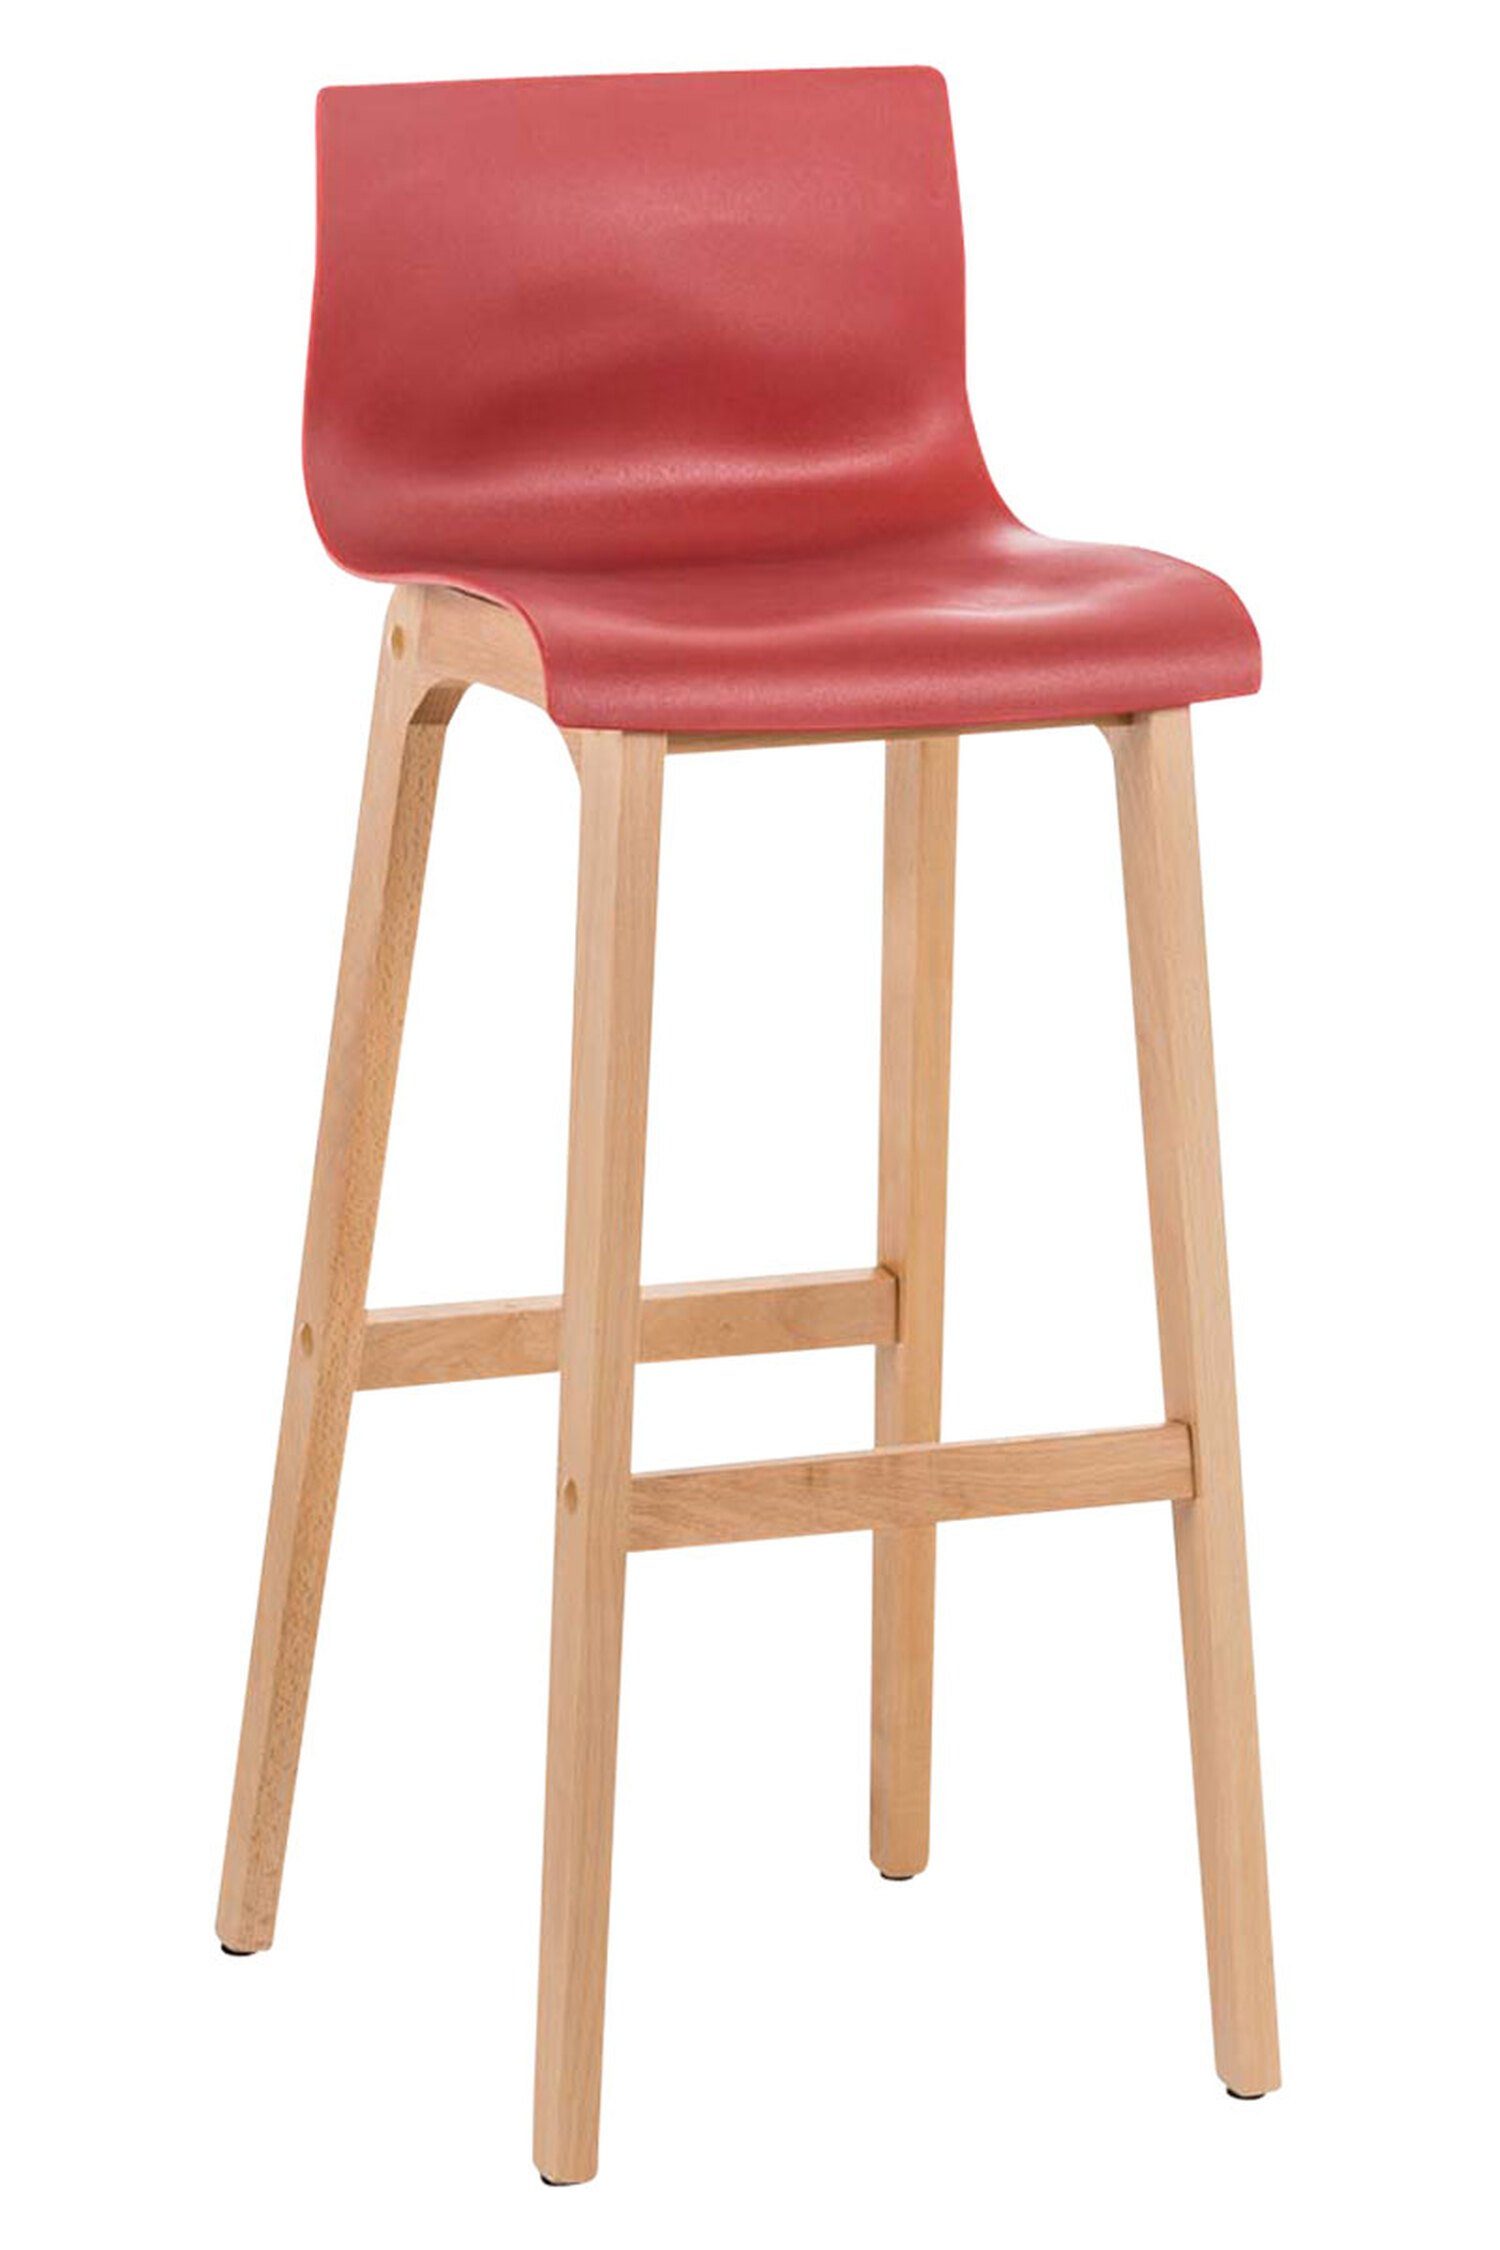 TPFLiving Barhocker Hoover (mit Fußstütze - Hocker für Theke & Küche - Tresenhocker), Gestell Metall hellbraun - Sitzfläche: Kunststoff Rot